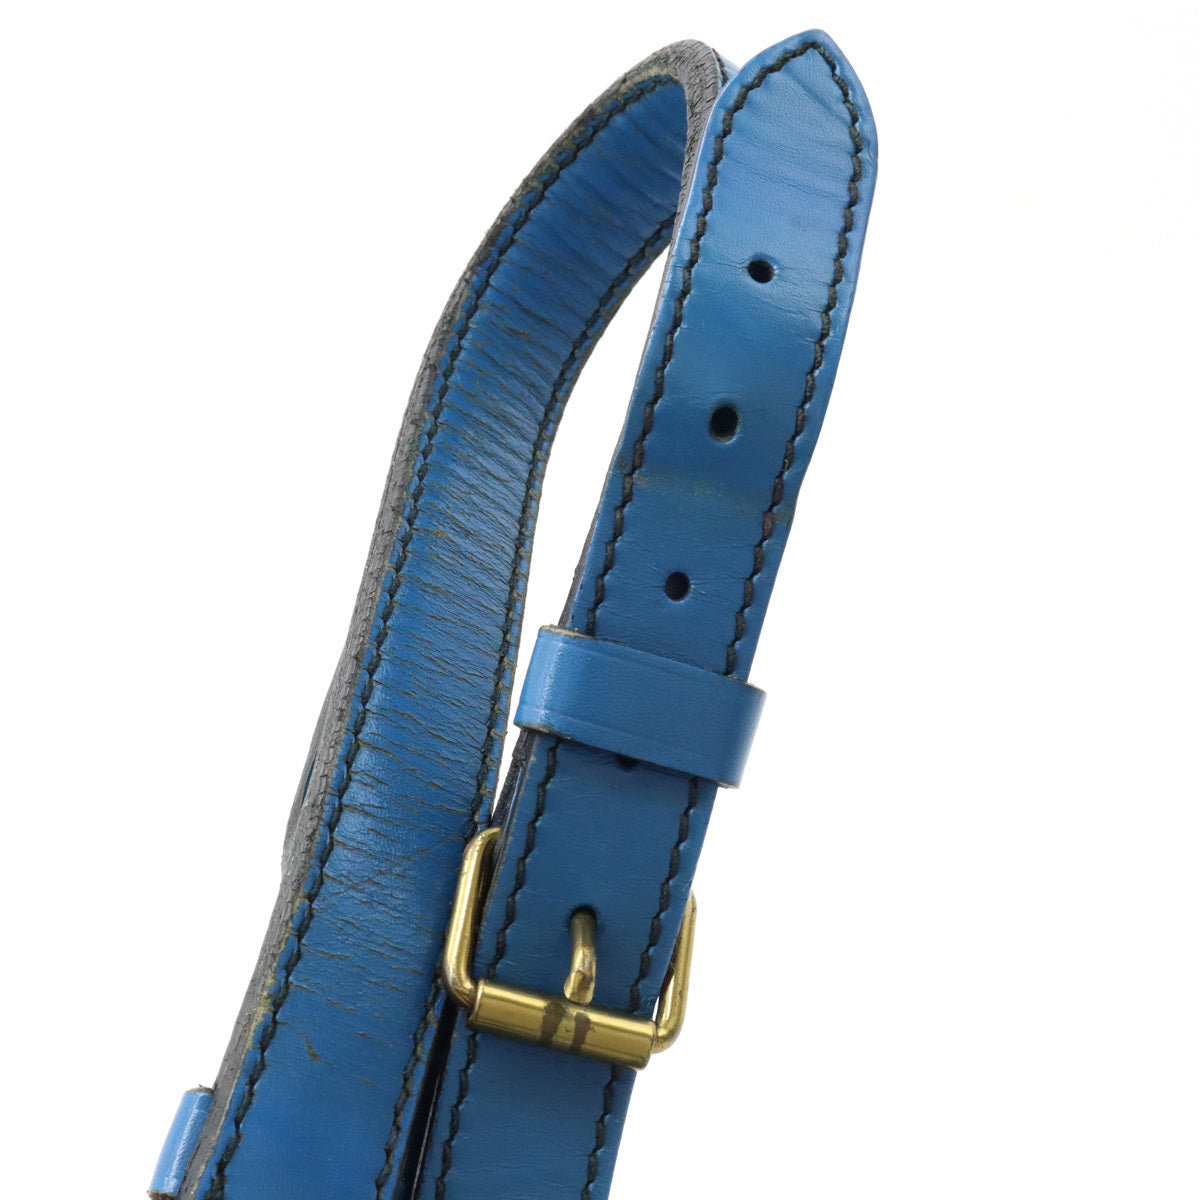 Louis Vuitton Petite Noe Epi Toledo Blue M44105